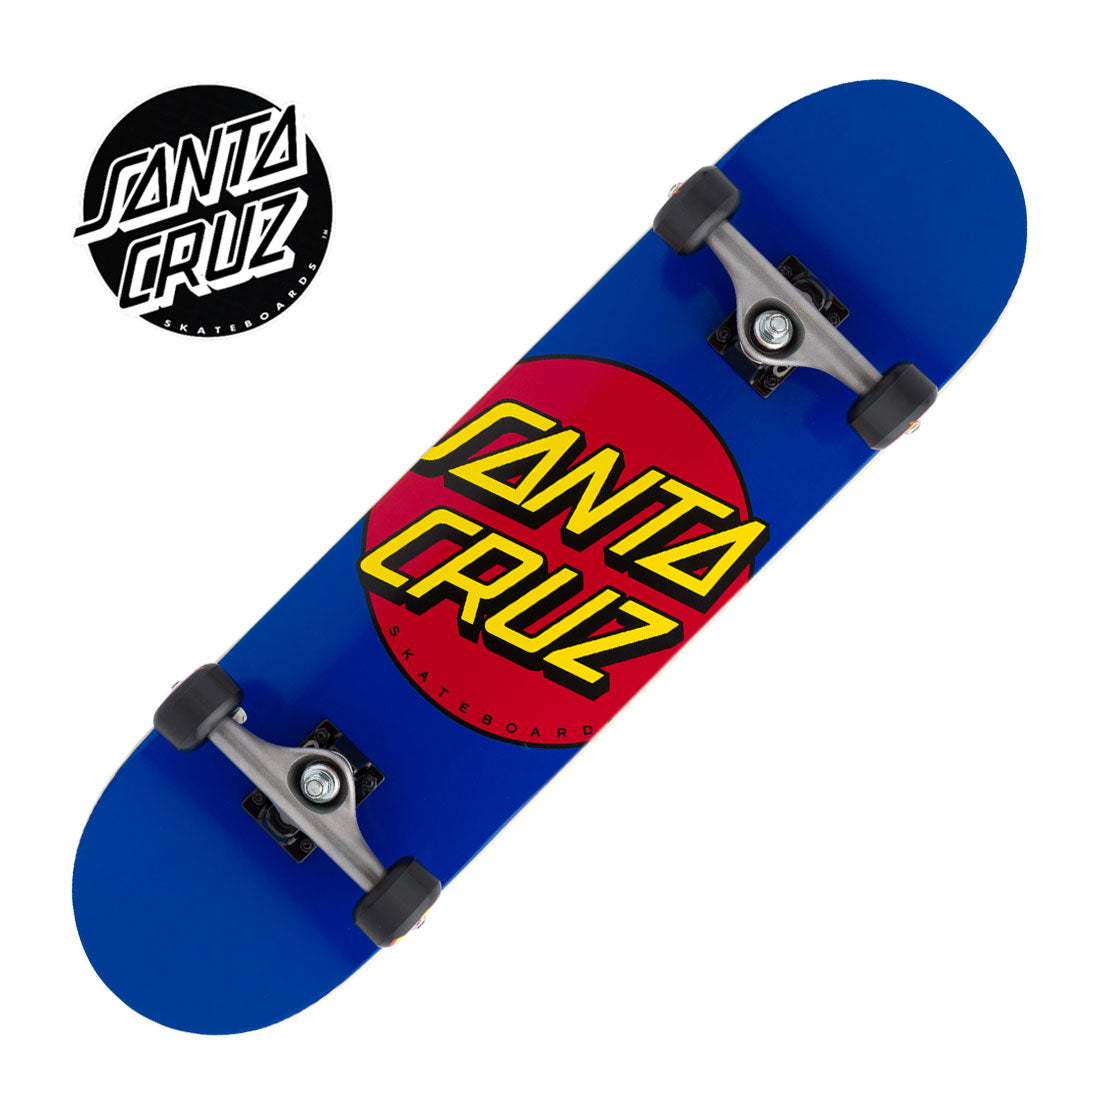 Santa Cruz Classic Dot 8.0 Complete - Blue/Black Skateboard Completes Modern Street